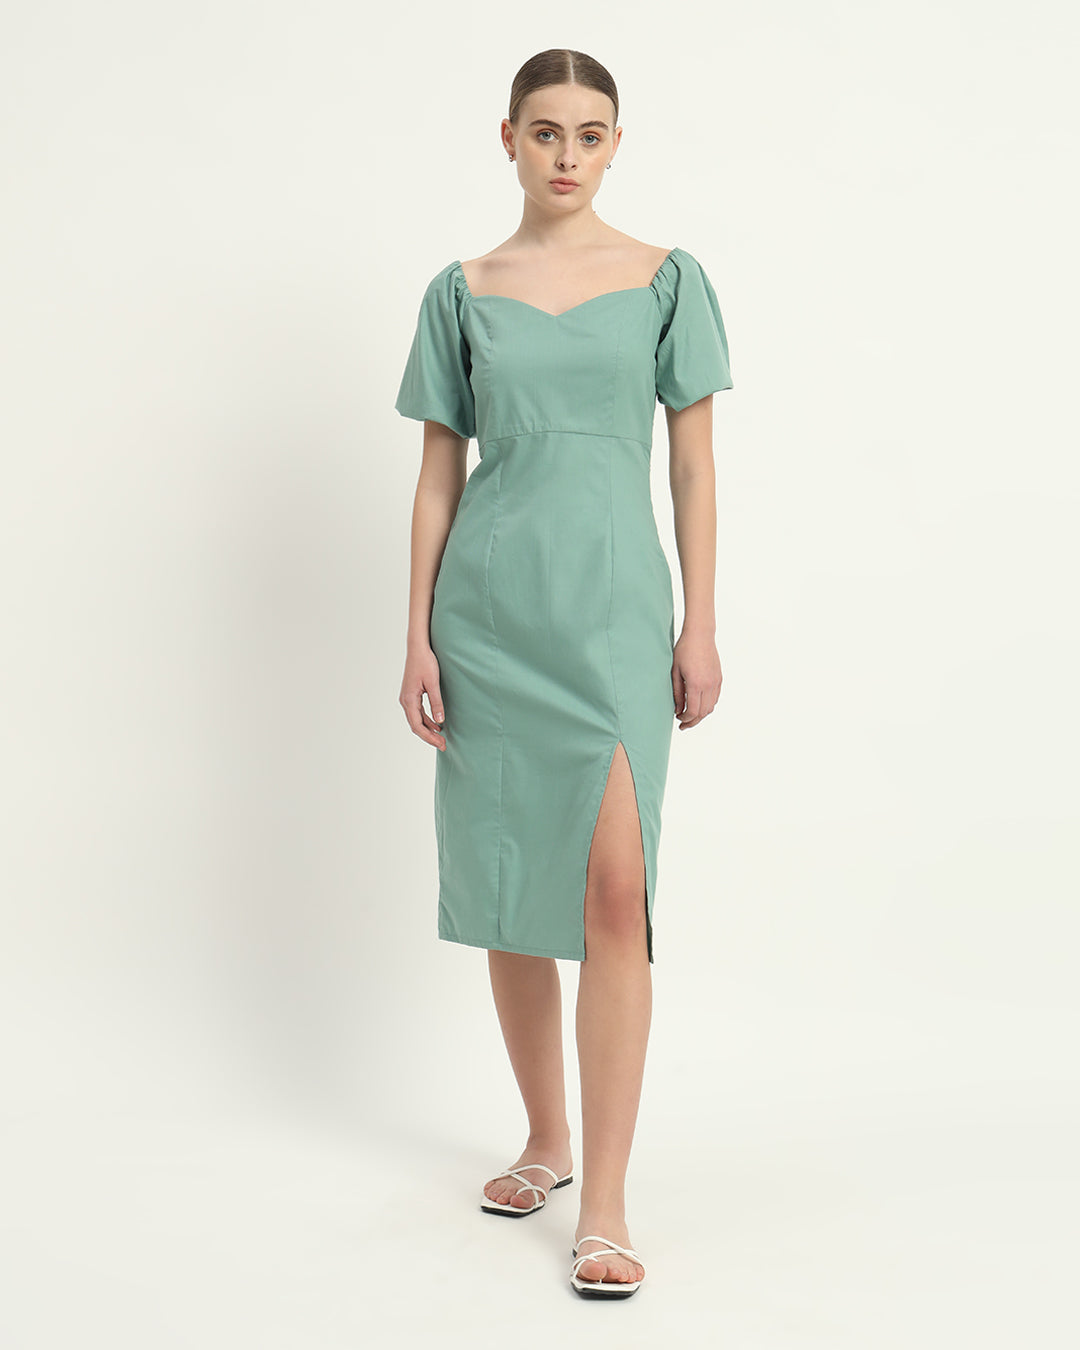 The Mint Erwin Cotton Dress